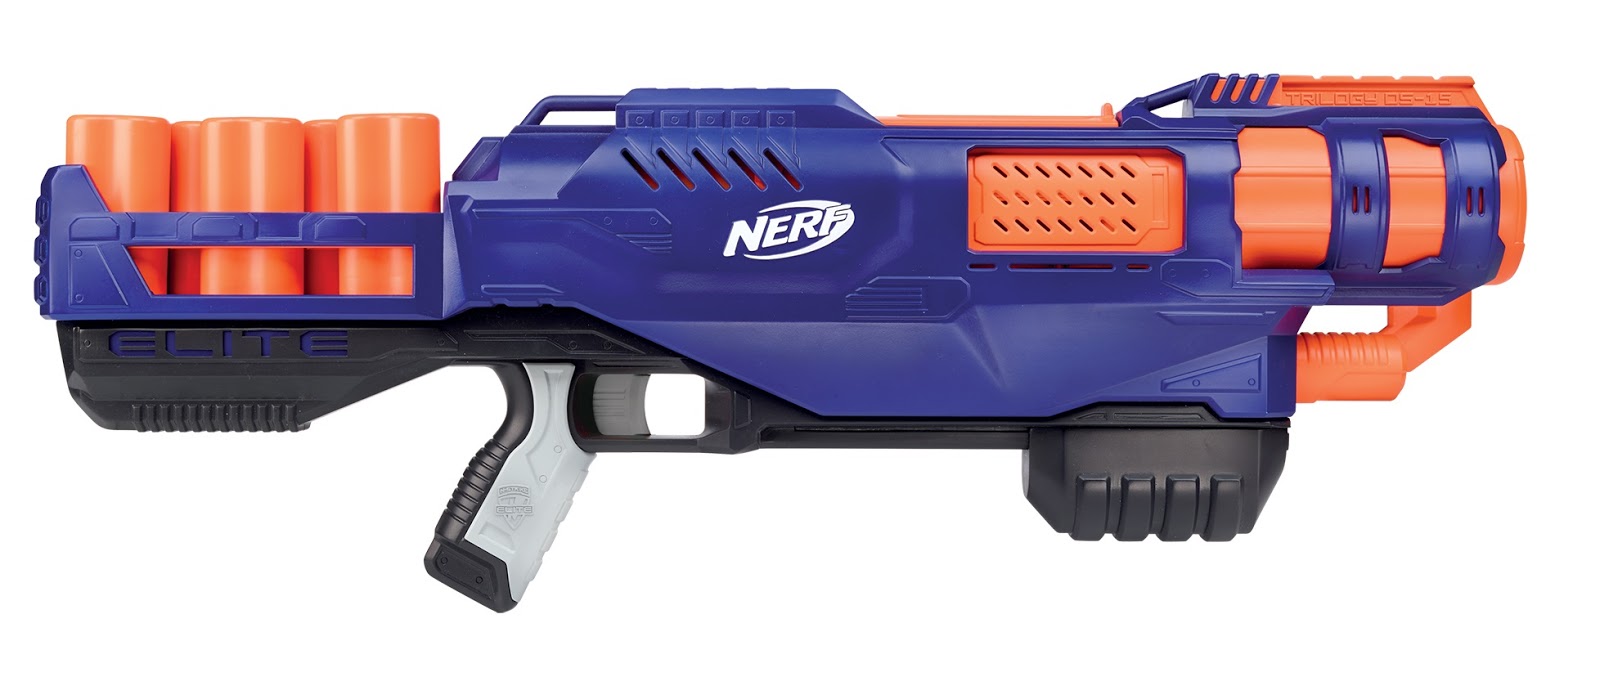 Nerfarium: NERF N-Strike Elite TRILOGY DS-15 pre-order available now